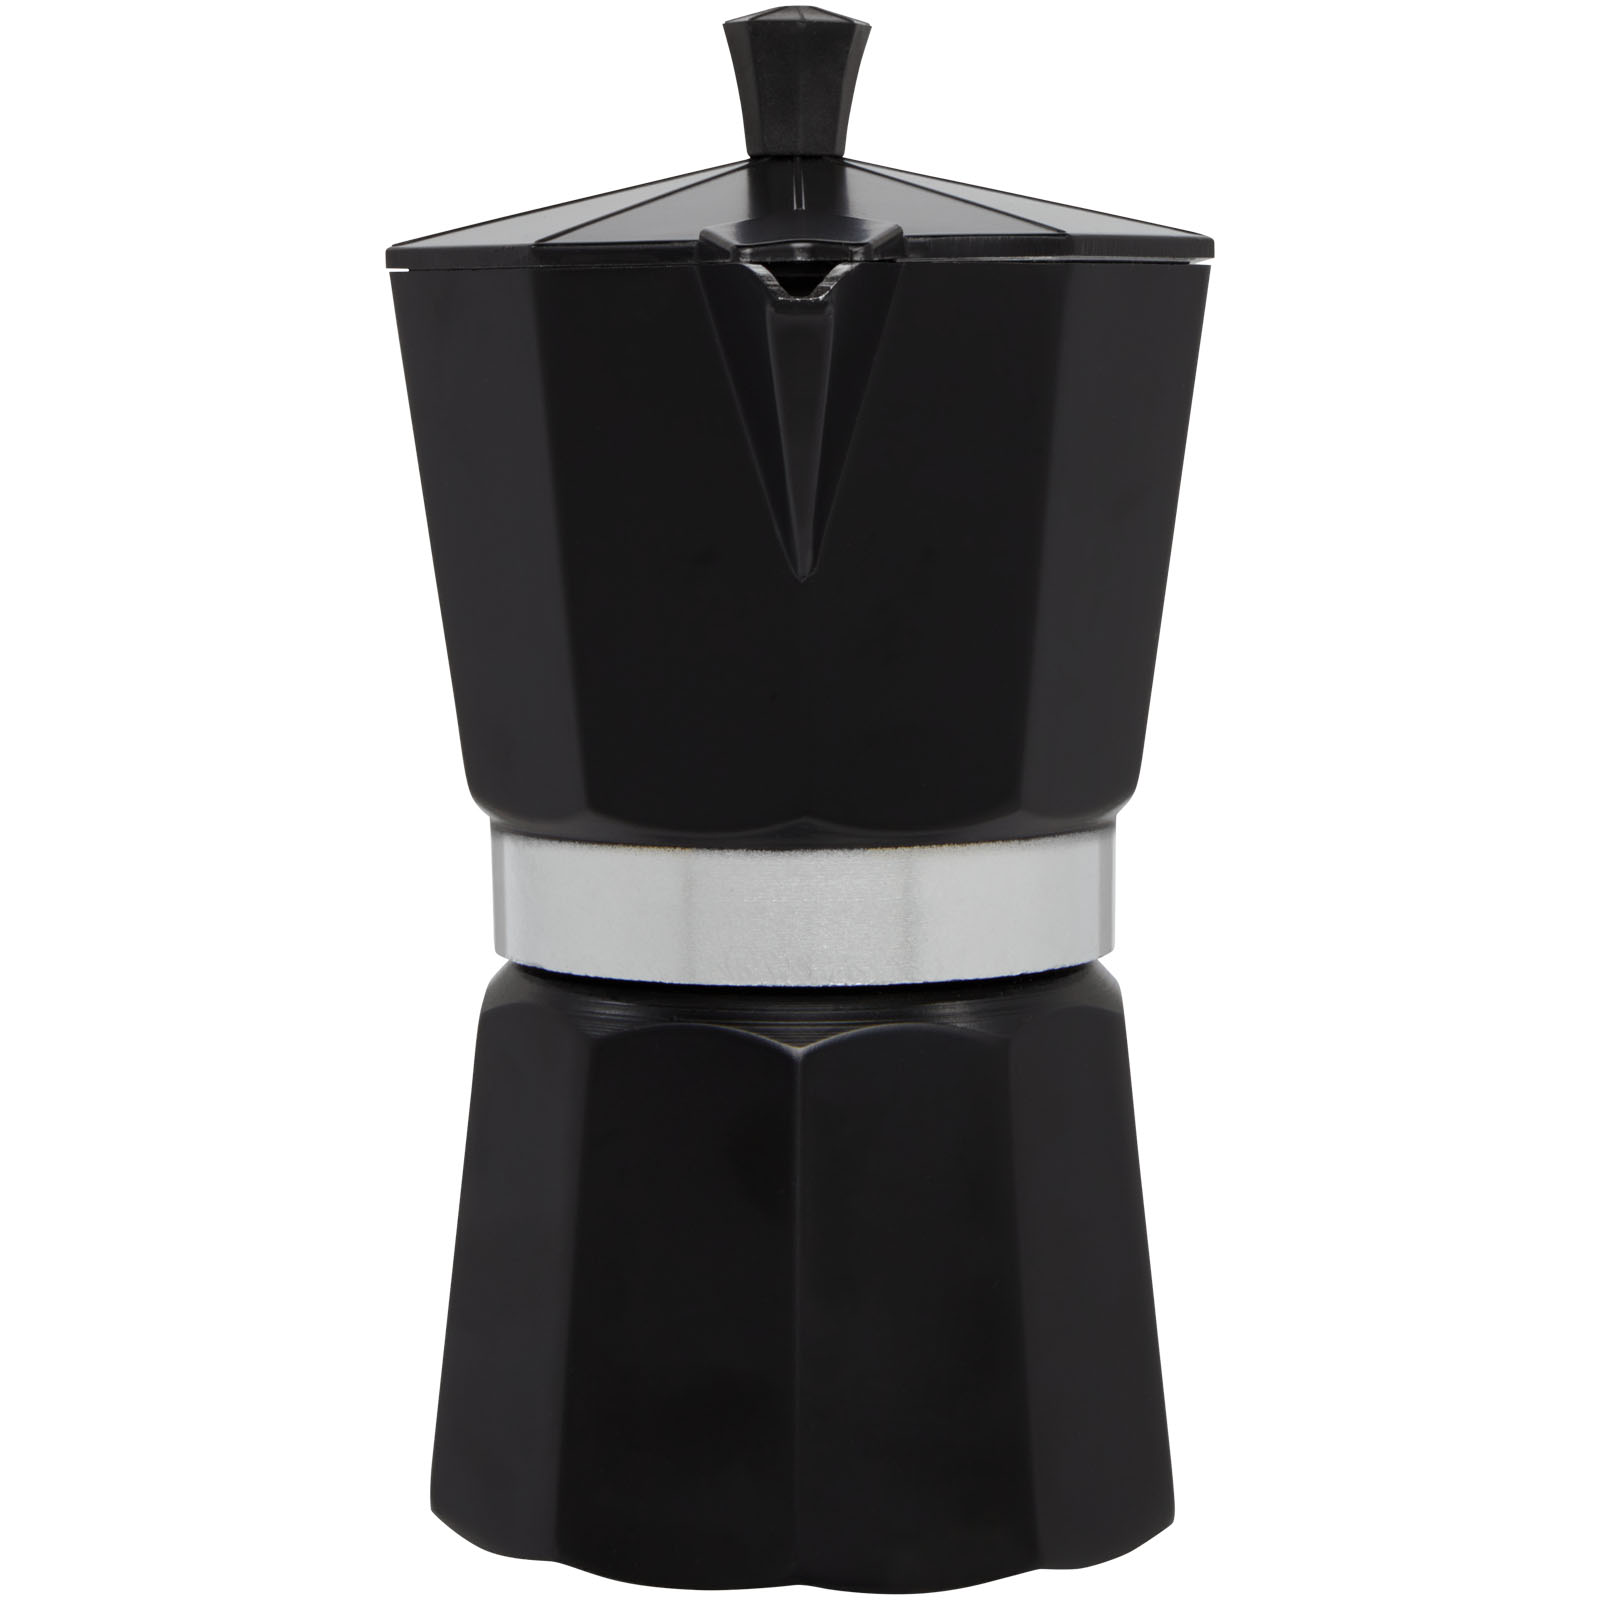 Advertising Kitchenware - Kone 600 ml mocha coffee maker - 1